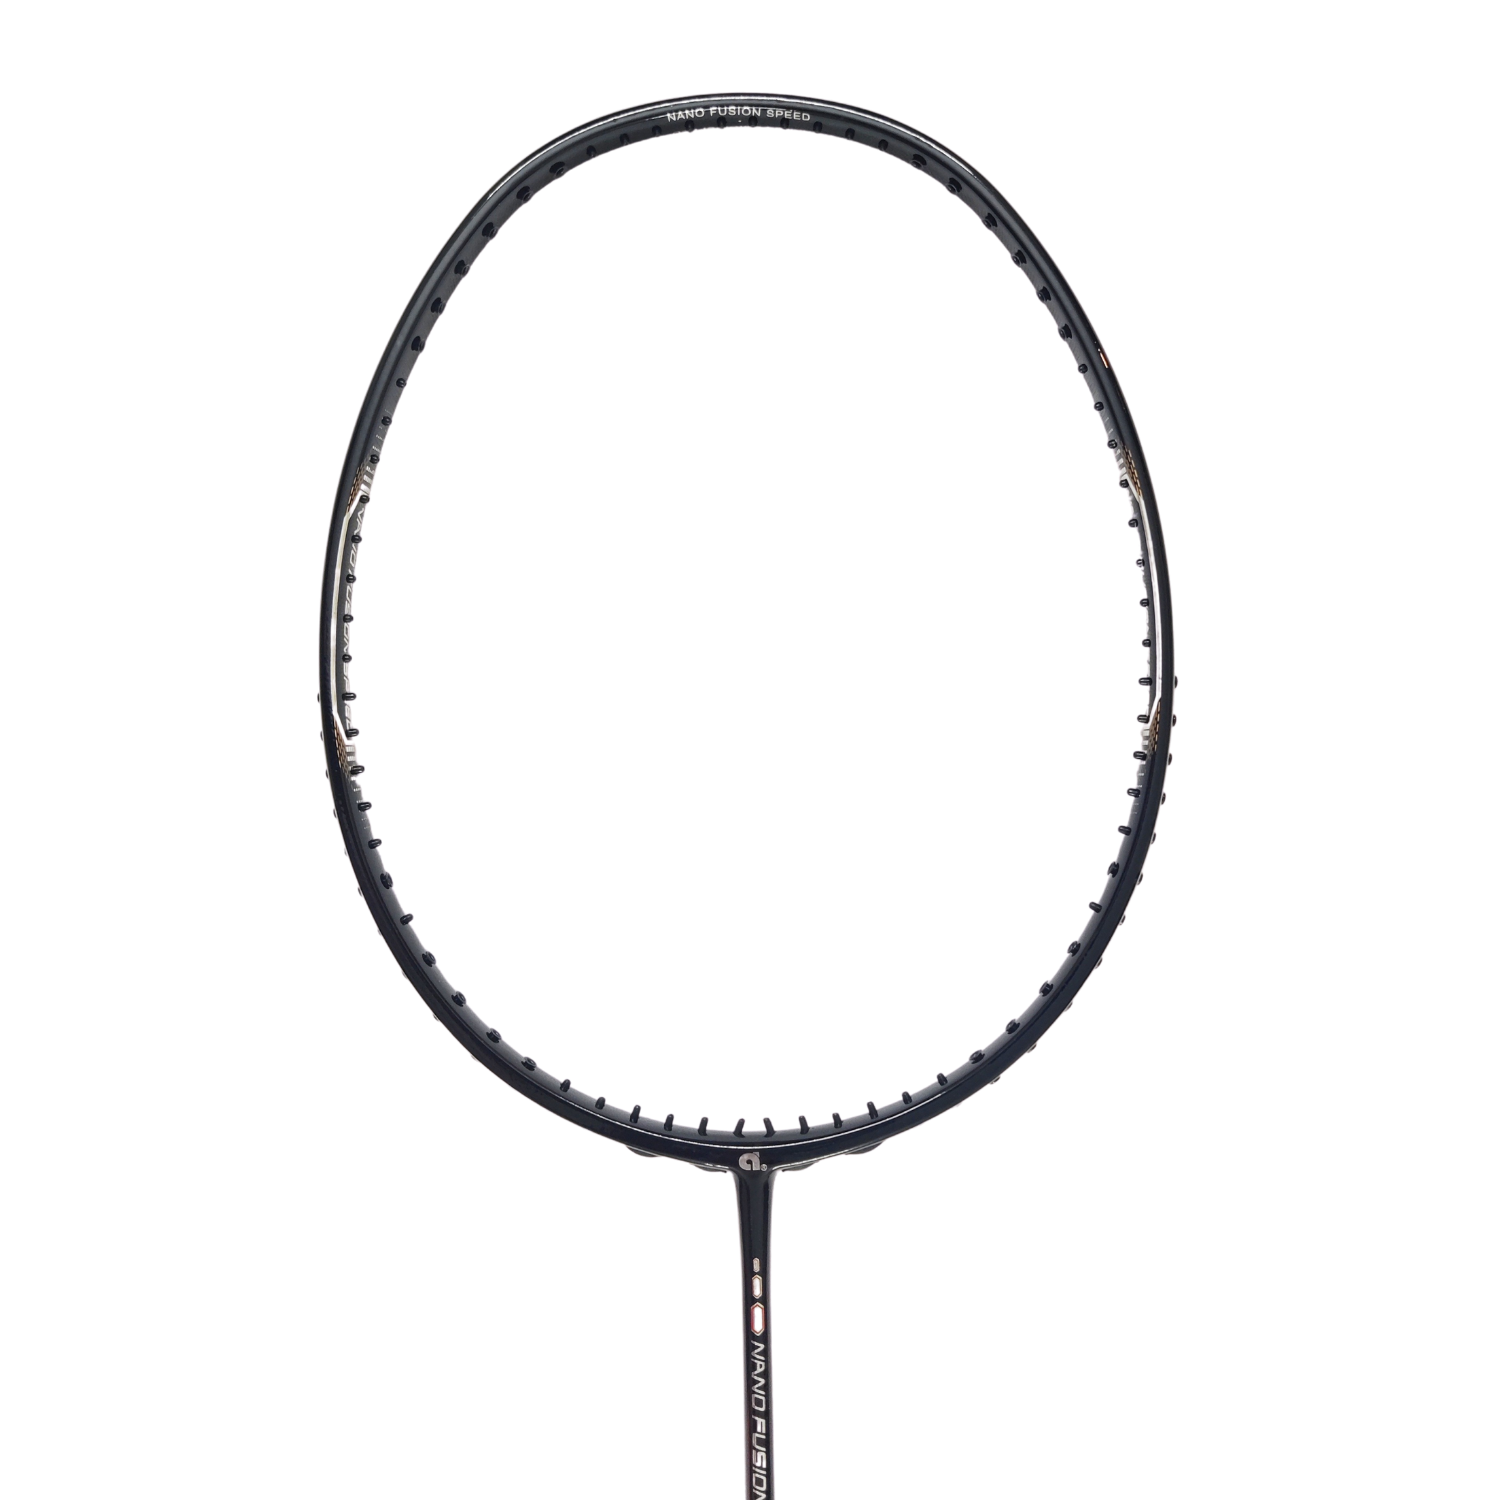 Apacs Nano Fusion Speed 725 Badminton Racket - Unstrung